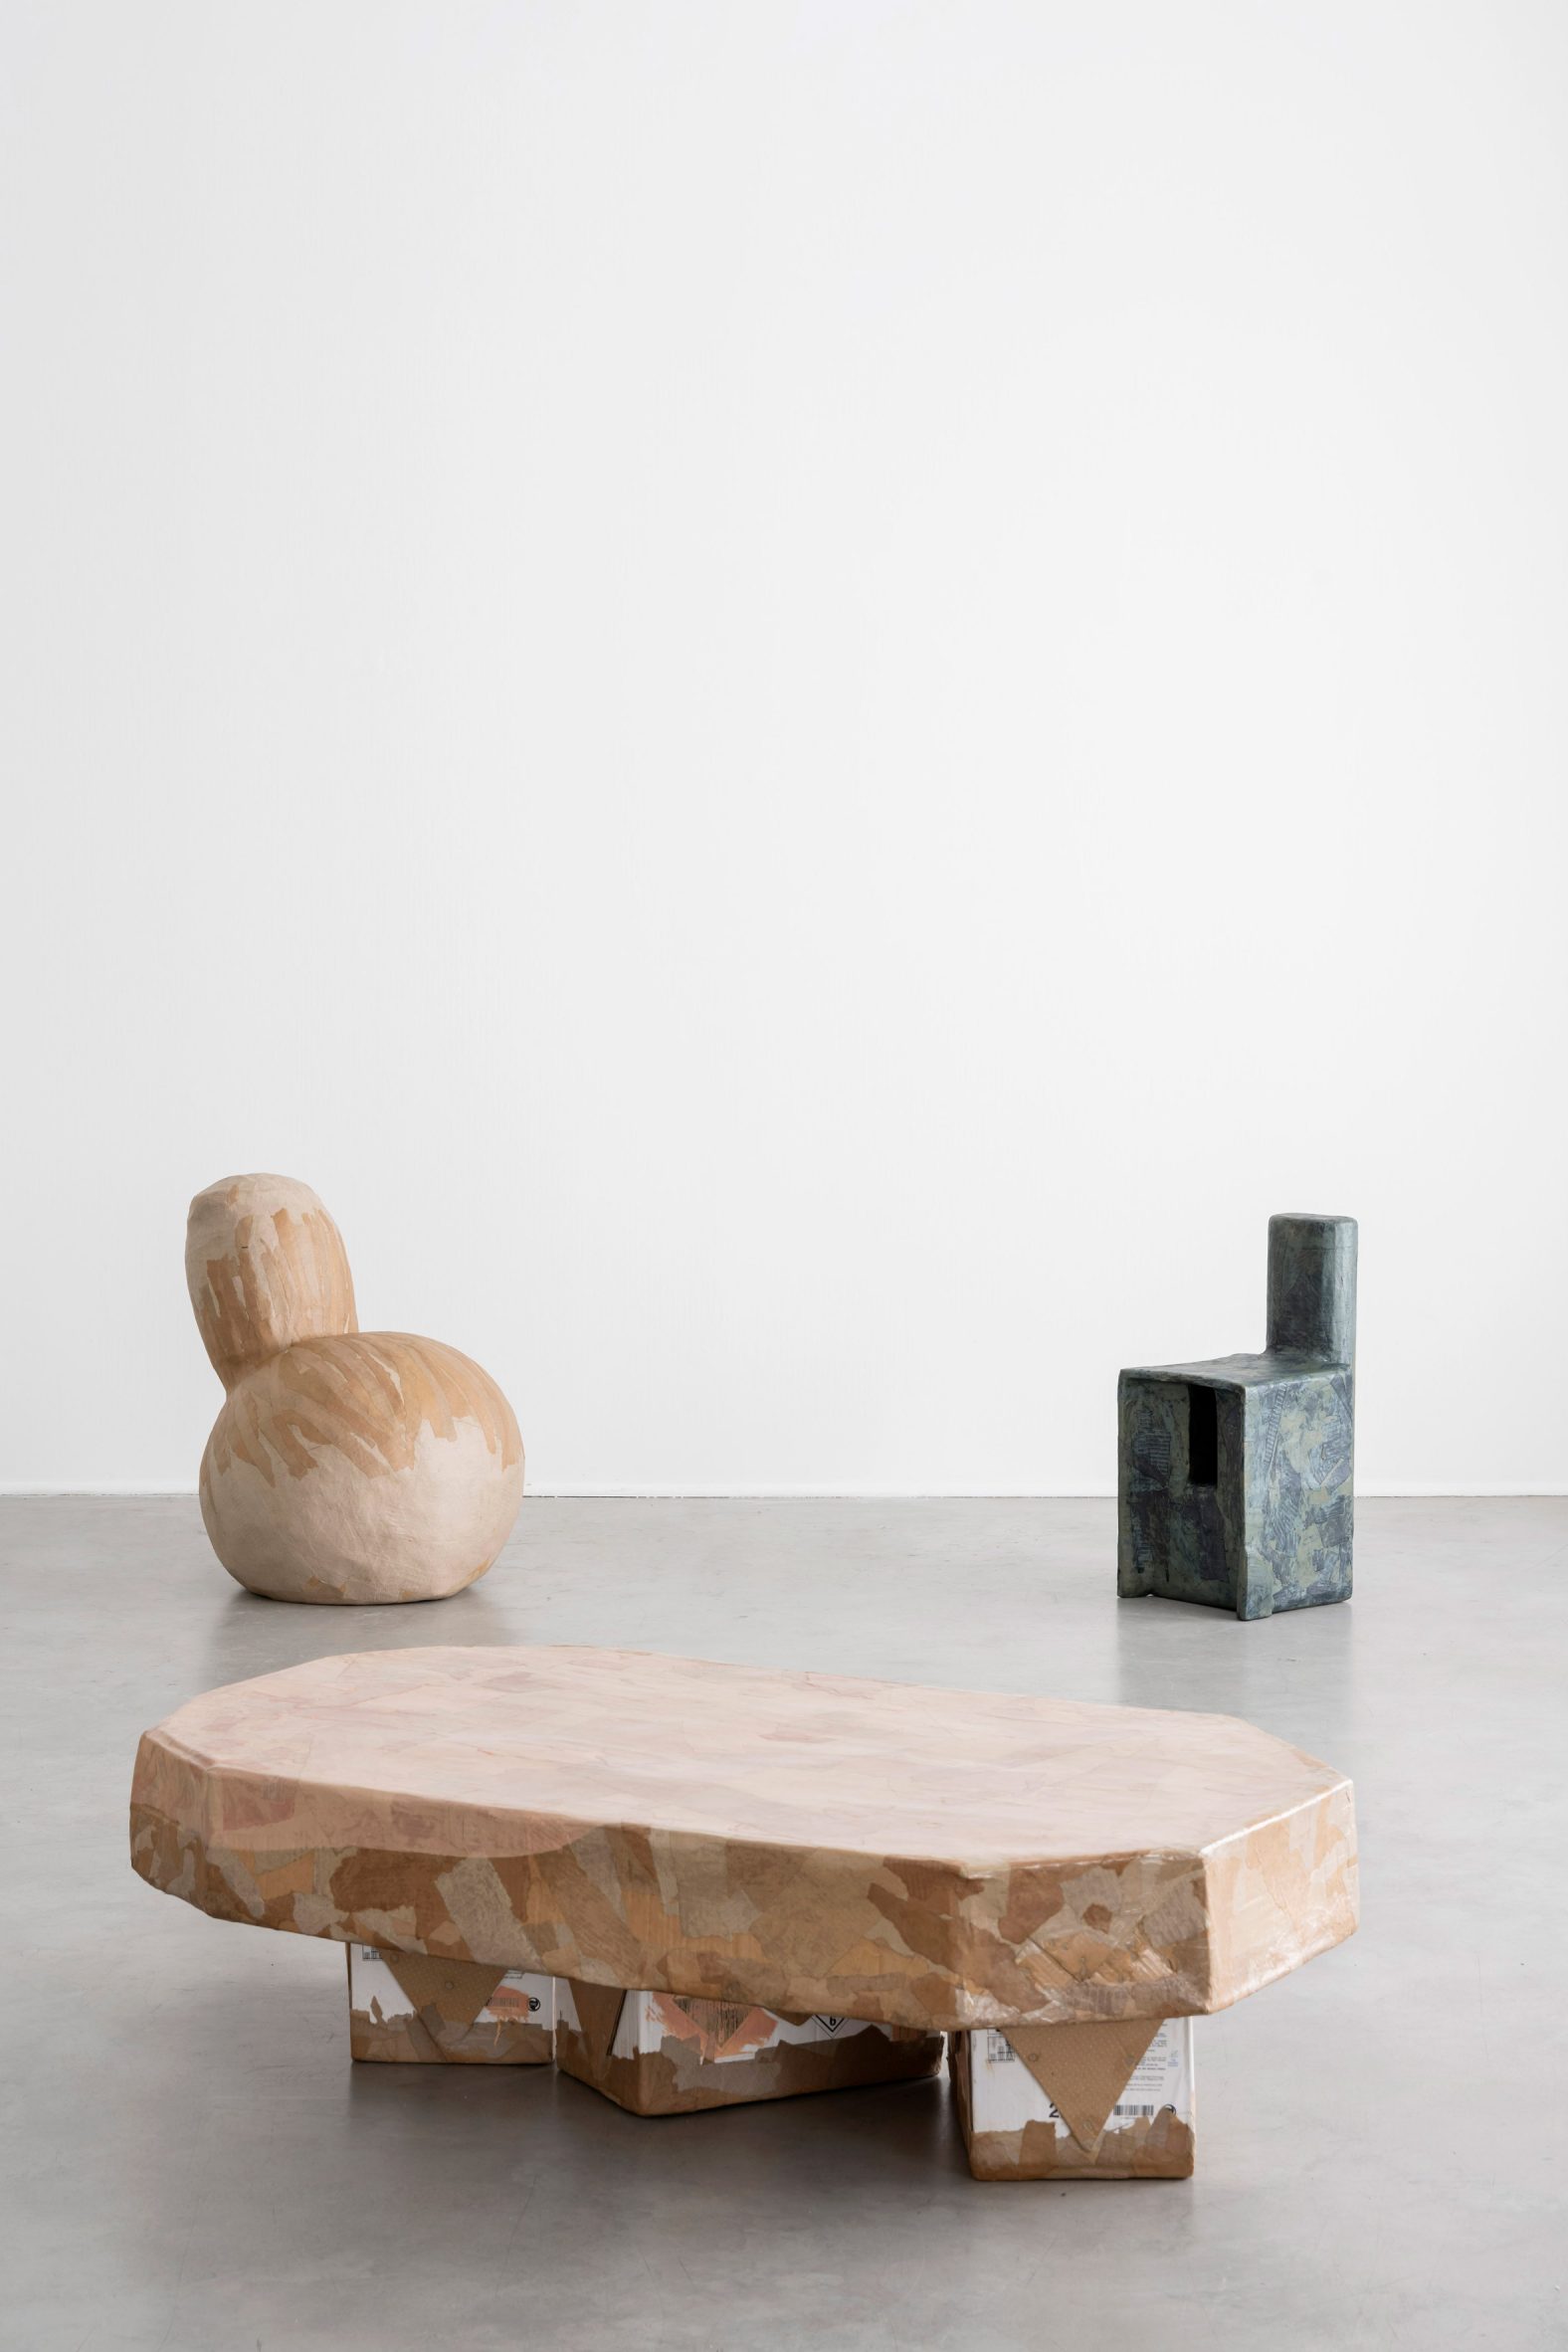 Max Lamb's Striking, Sand-and-Packing-Foam Furniture - The Atlantic